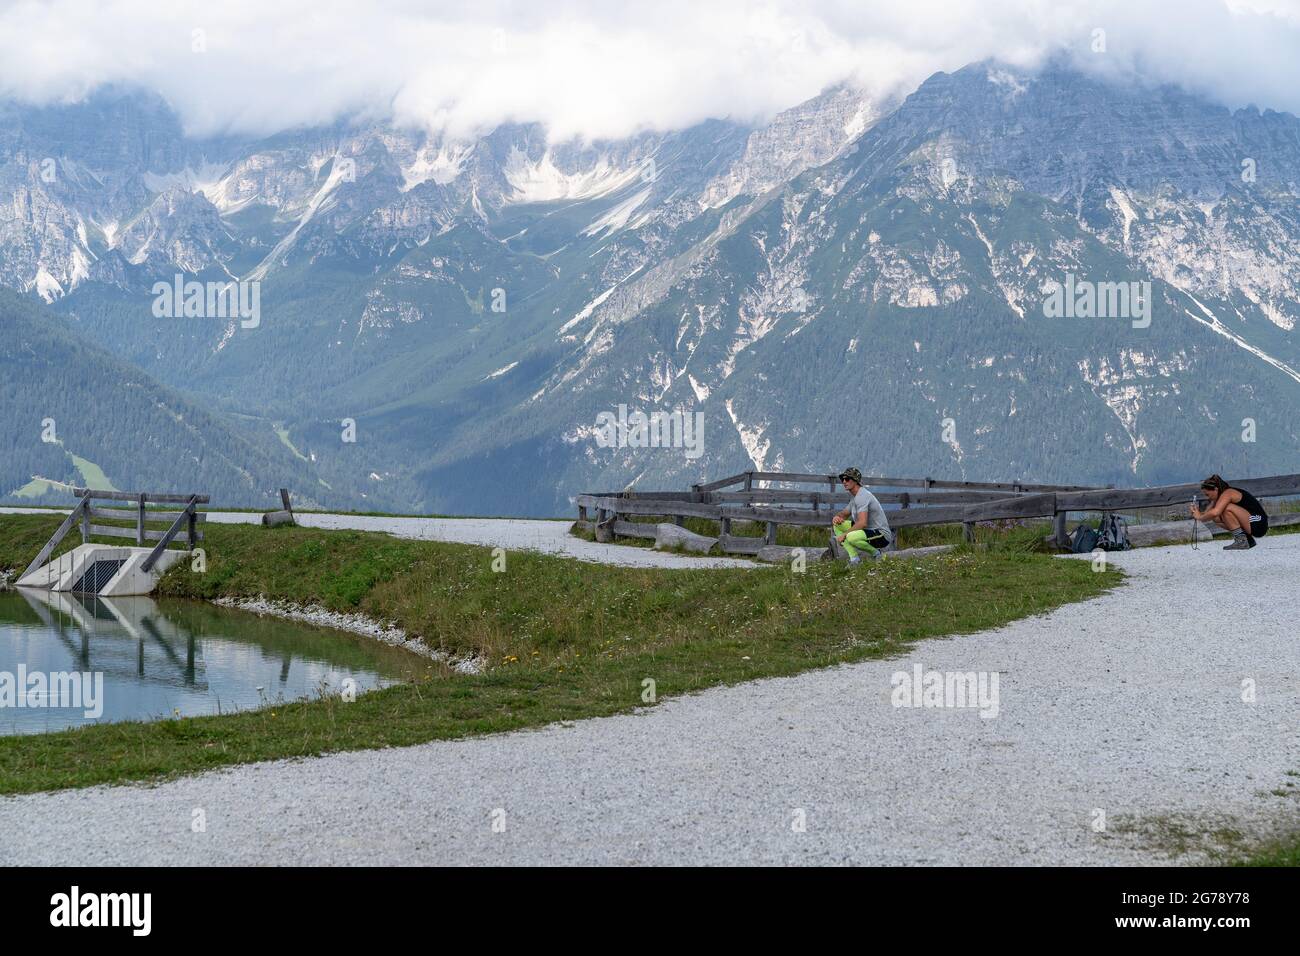 Europe, Austria, Tyrol, Stubai Alps, influencer poses for Instagram photo in front of a mountain backdrop Stock Photo